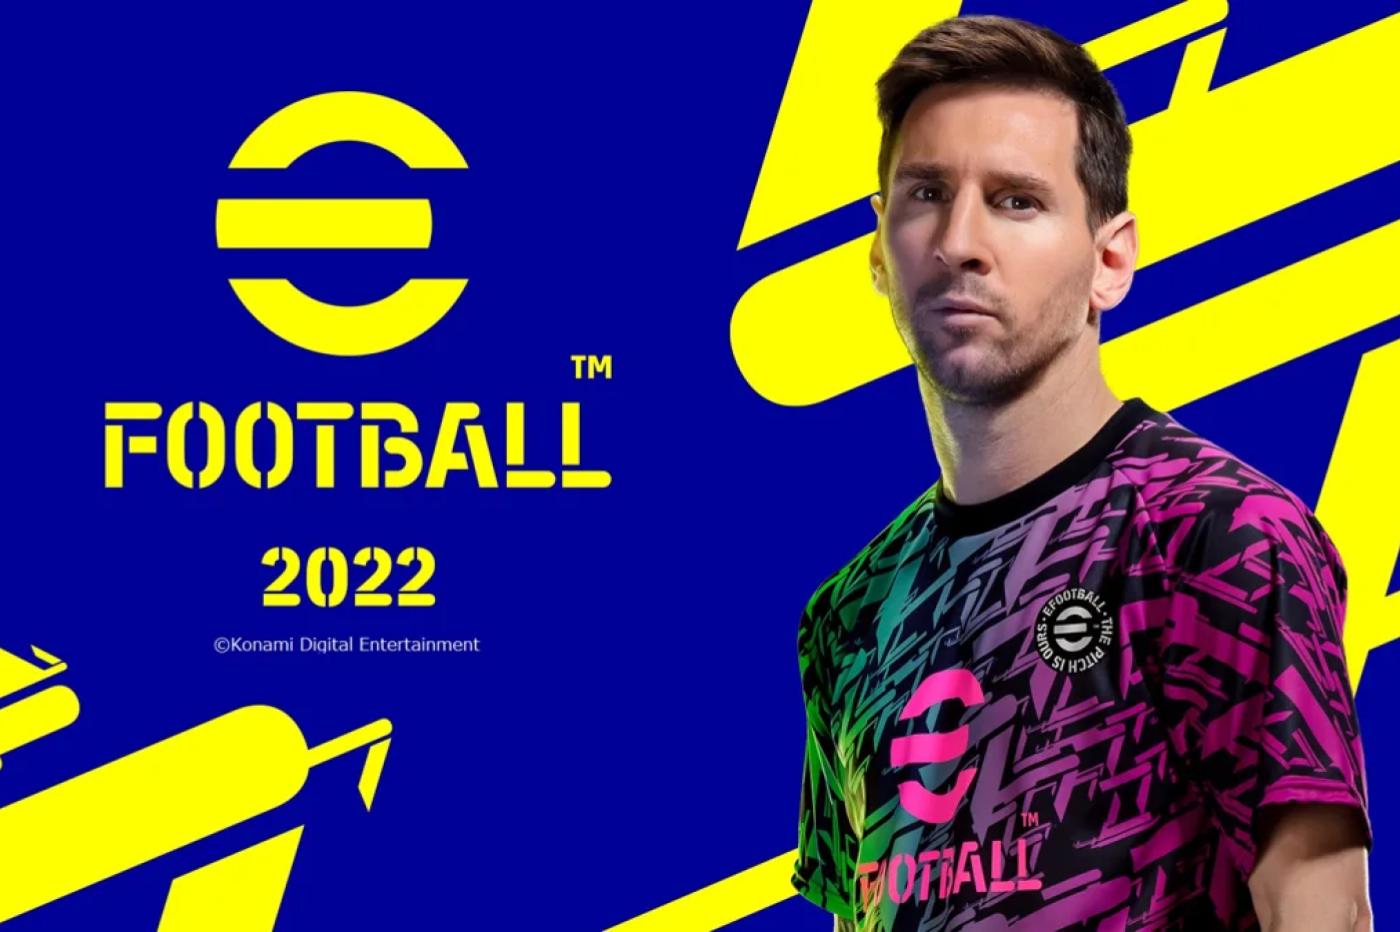 efootball 2022 Messi